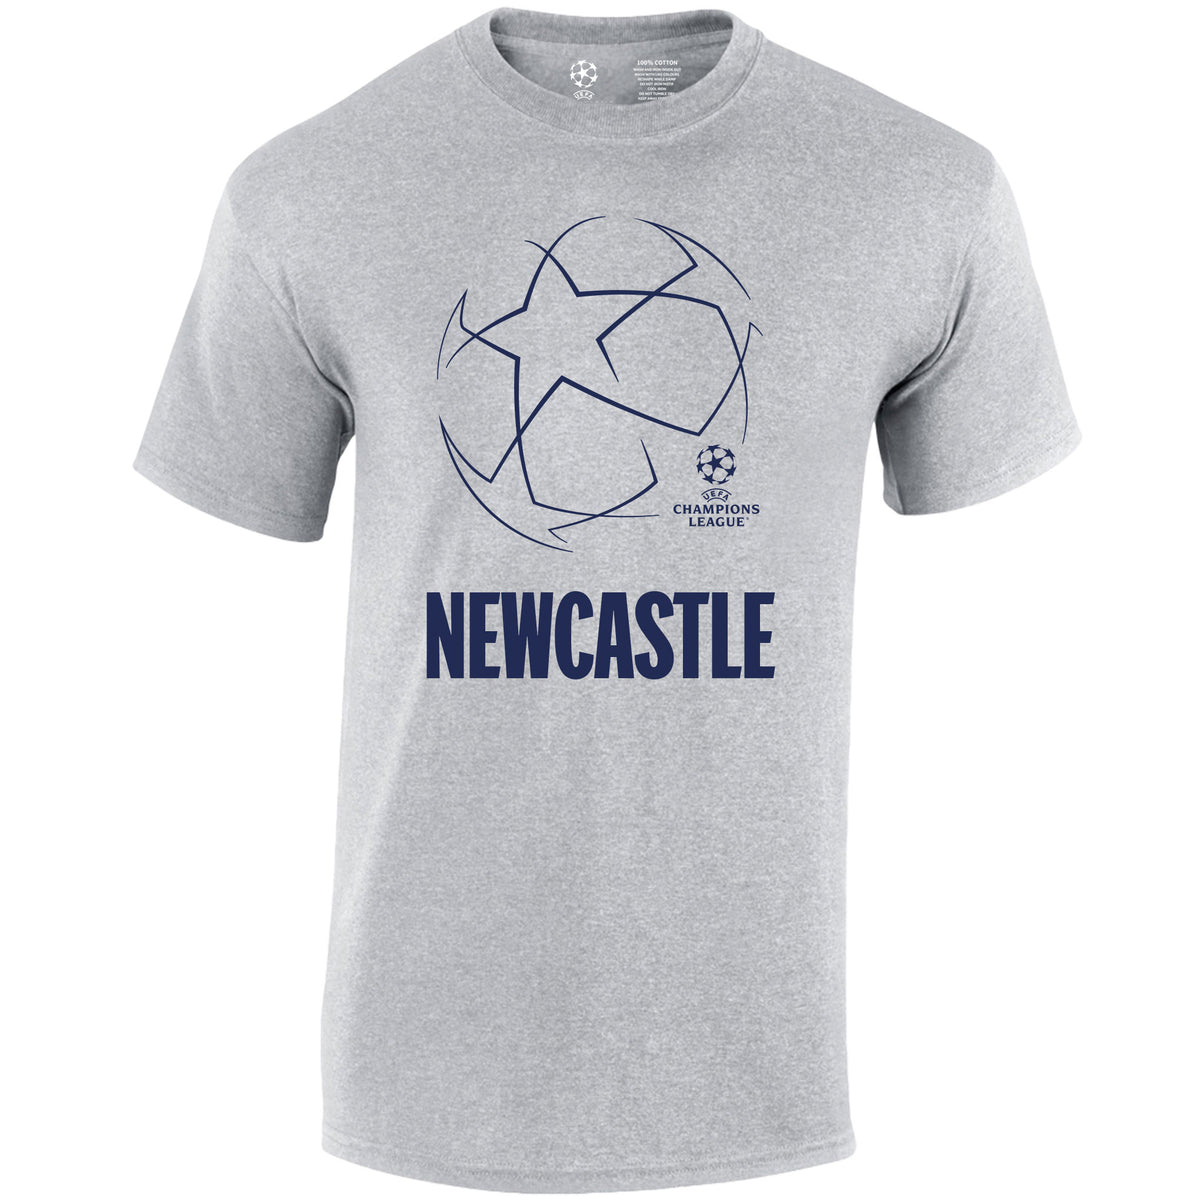 Champions League Starball Newcastle City T-Shirt Grey